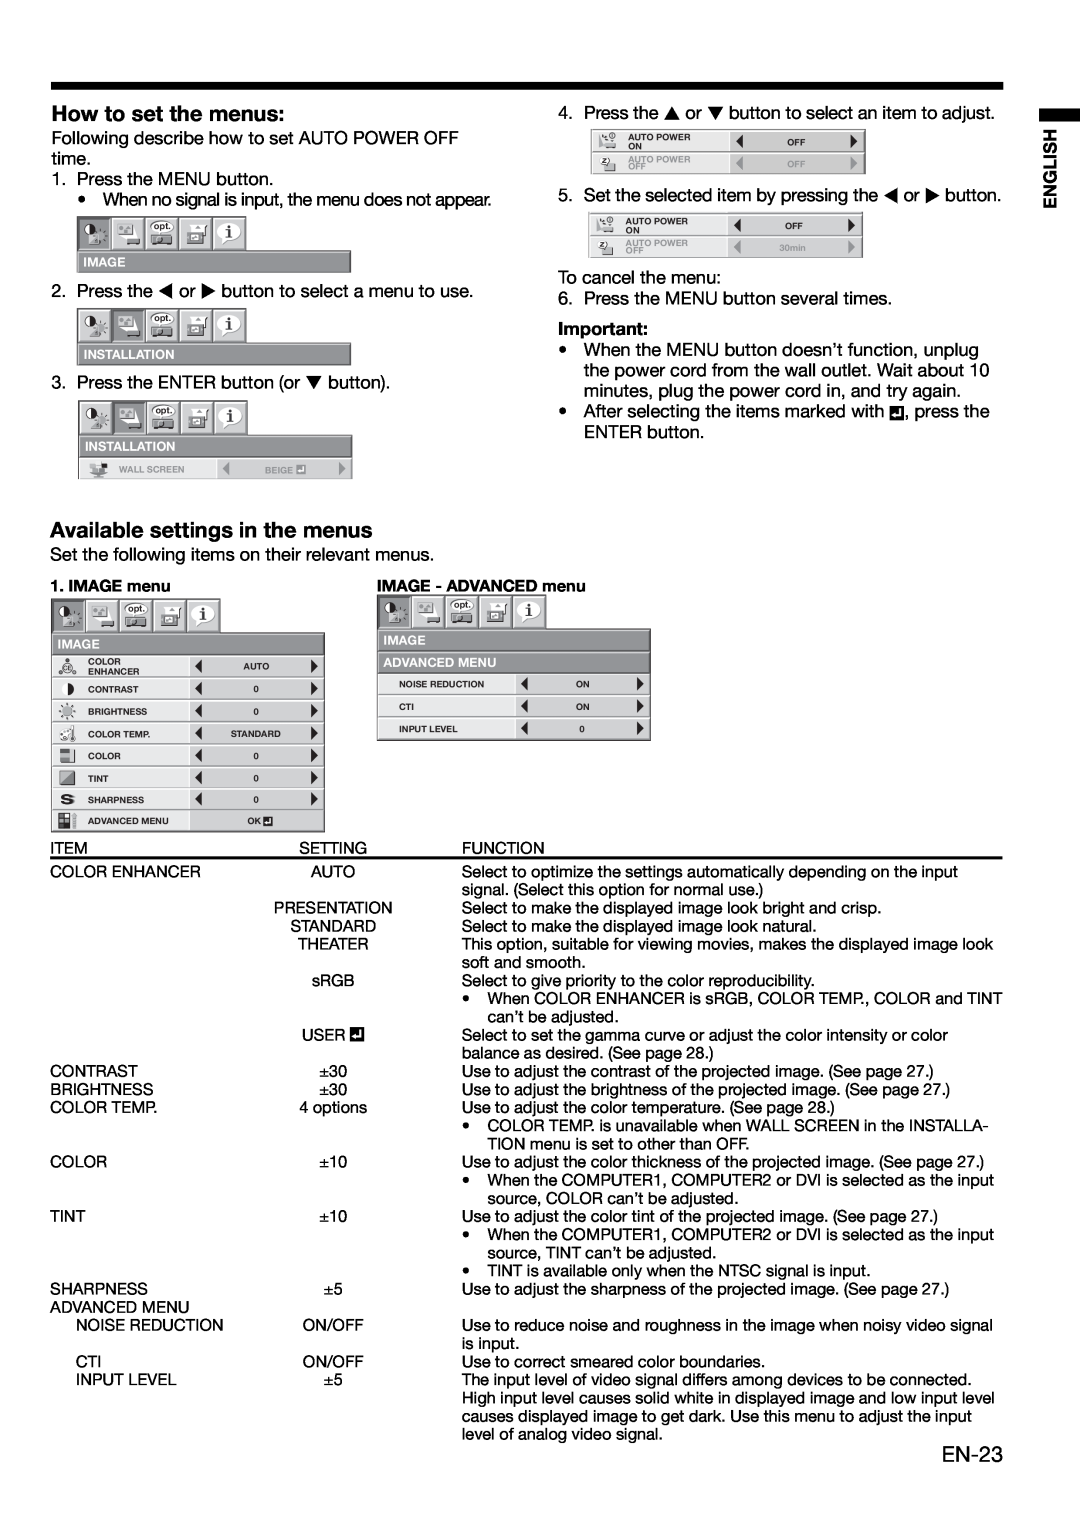 Mitsubishi Electronics XL650U user manual How to set the menus, Available settings in the menus, EN-23, English 